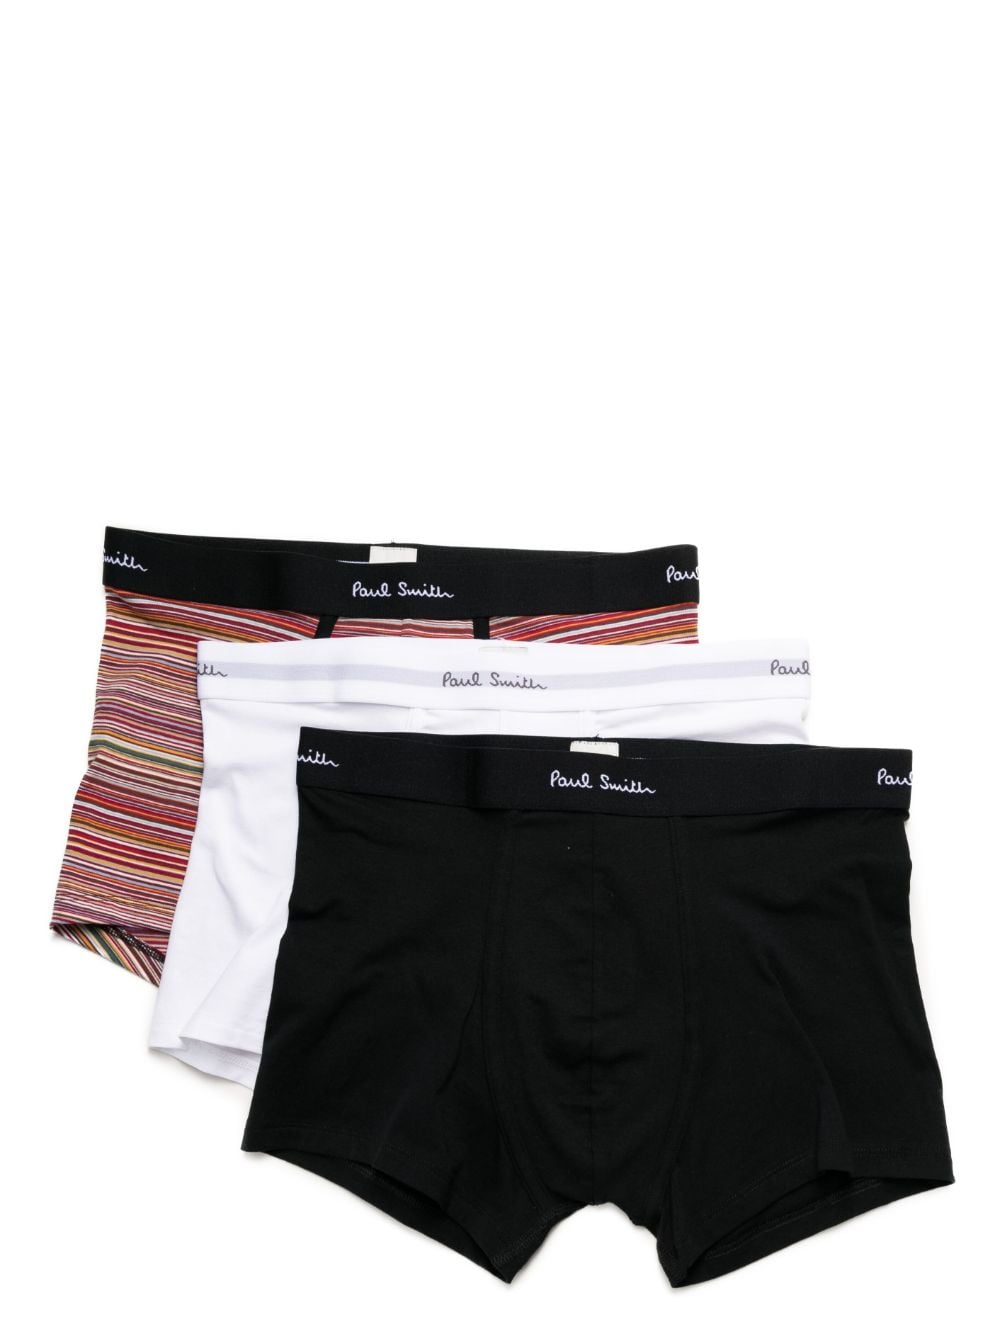 Paul Smith logo-waistband briefs (pack of three) - Black von Paul Smith